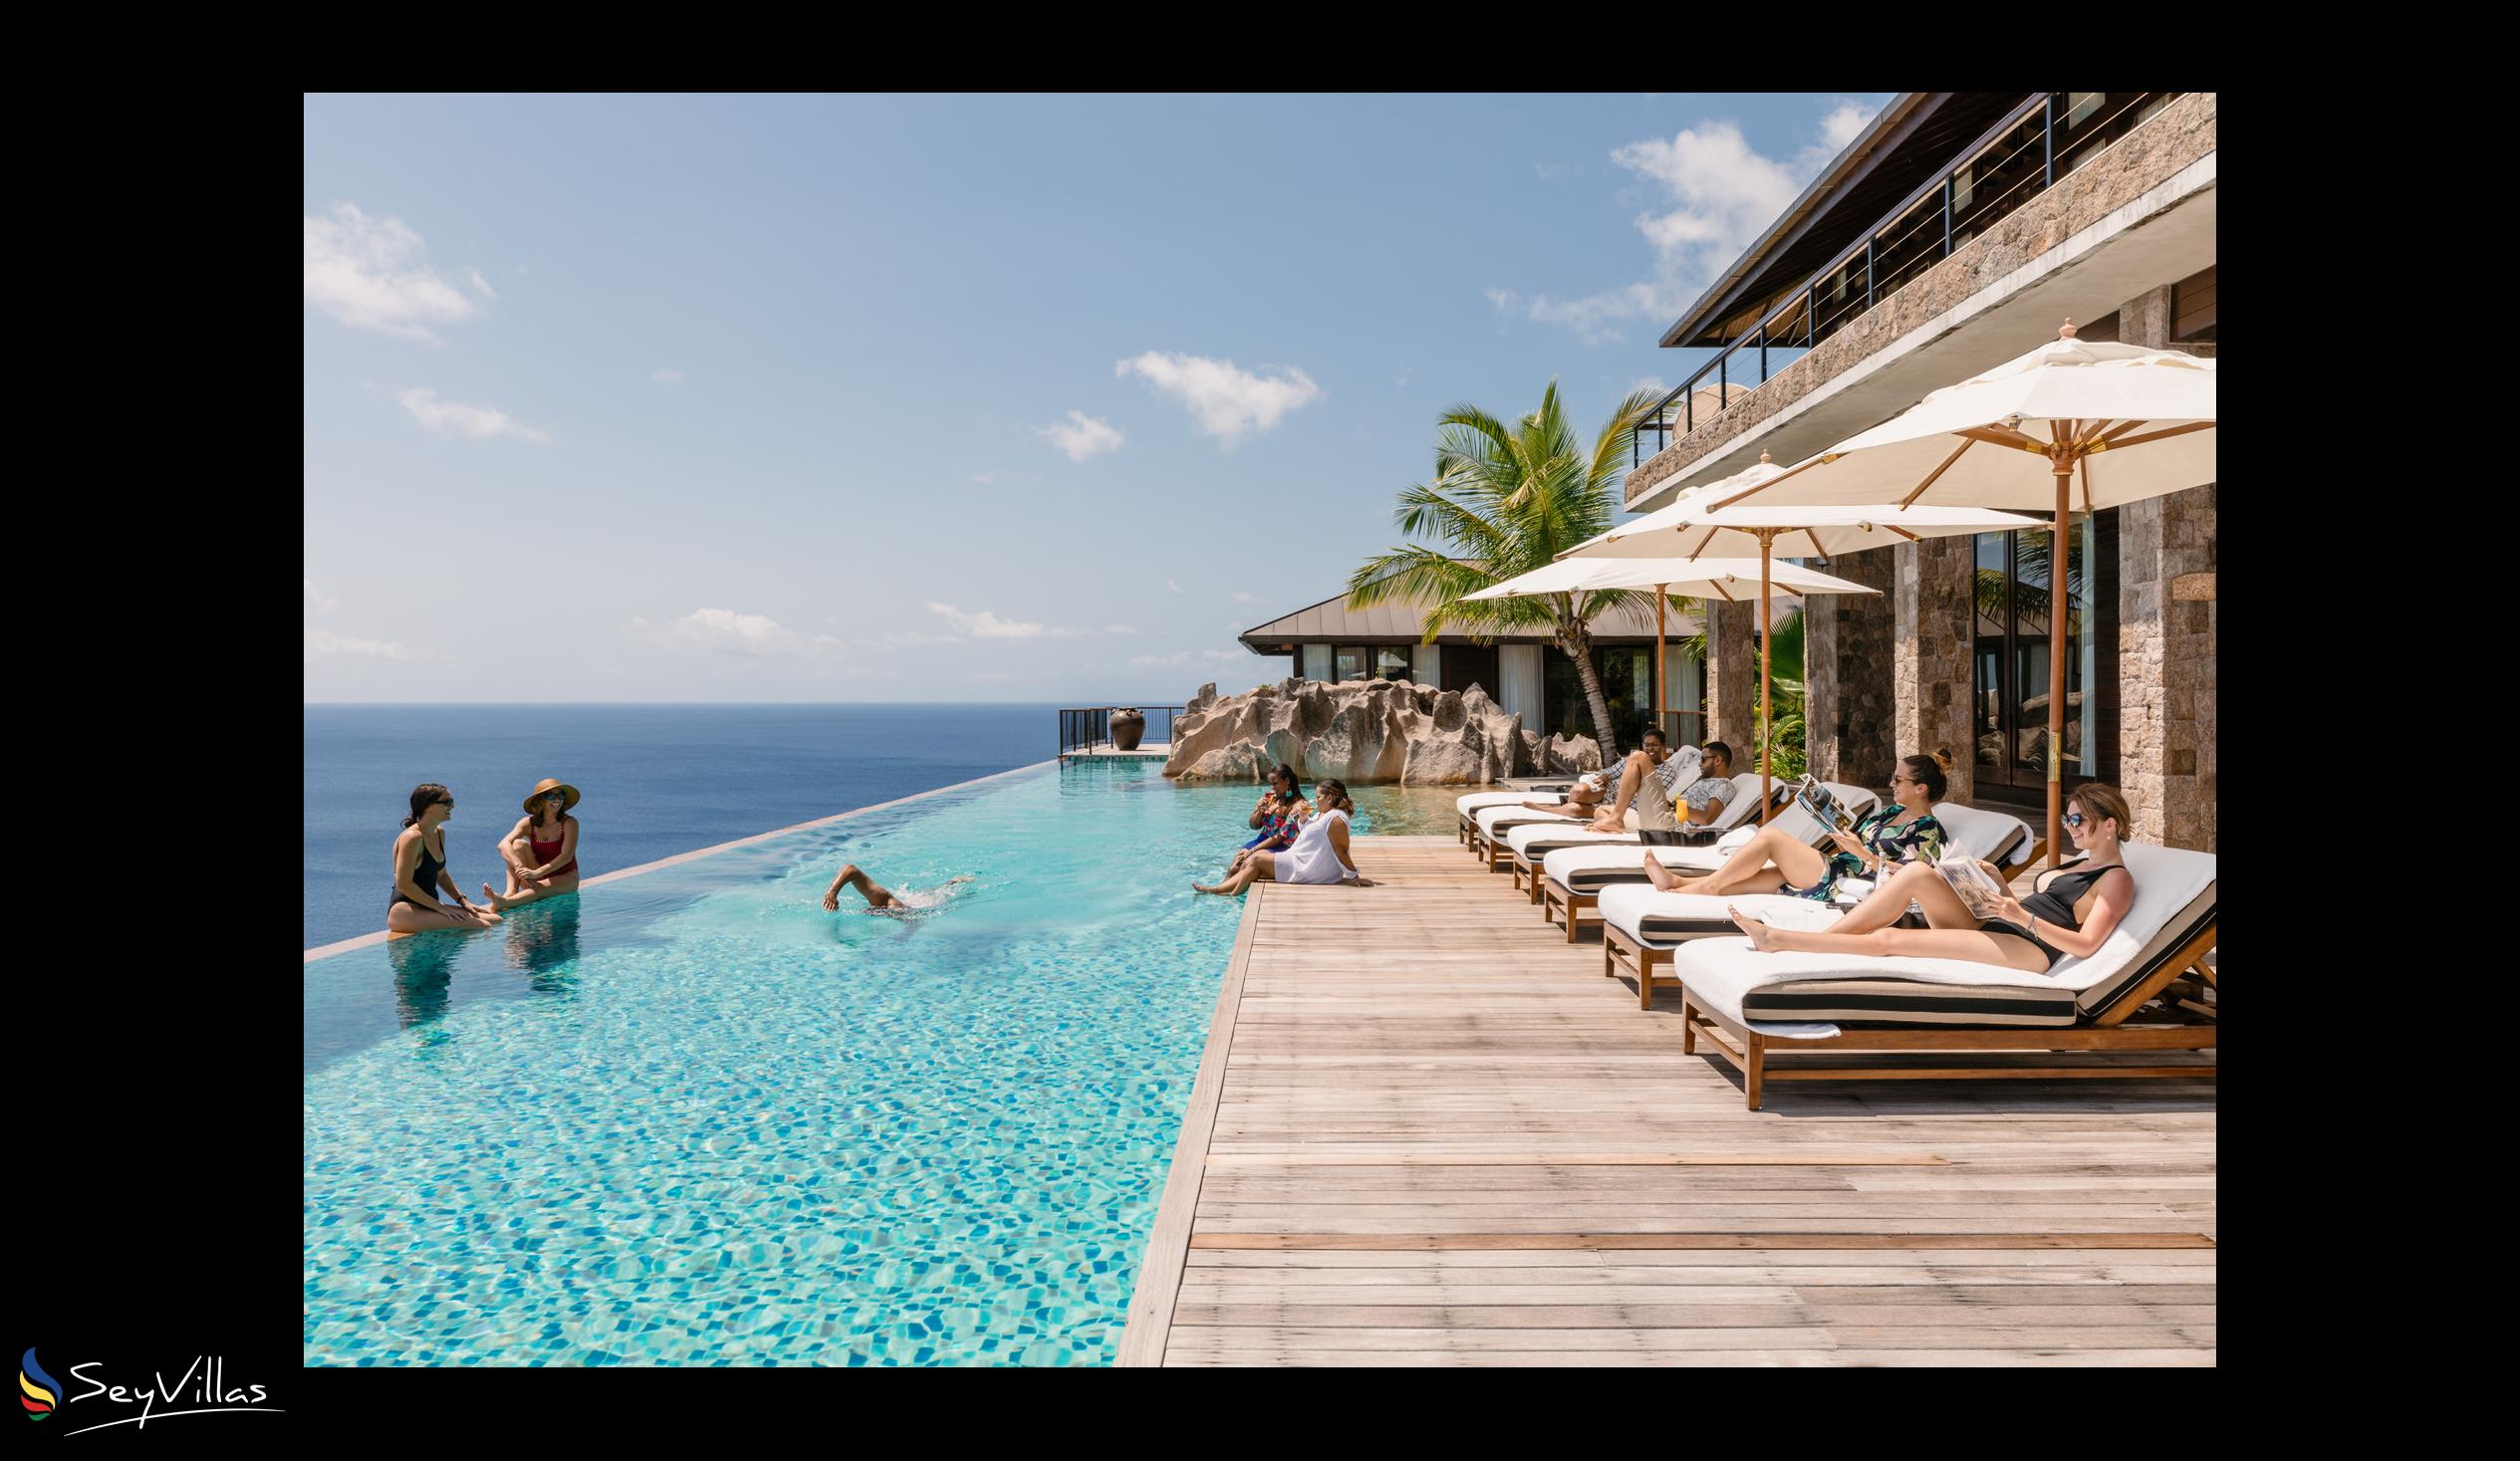 Photo 129: Four Seasons Resort - Mahé (Seychelles)